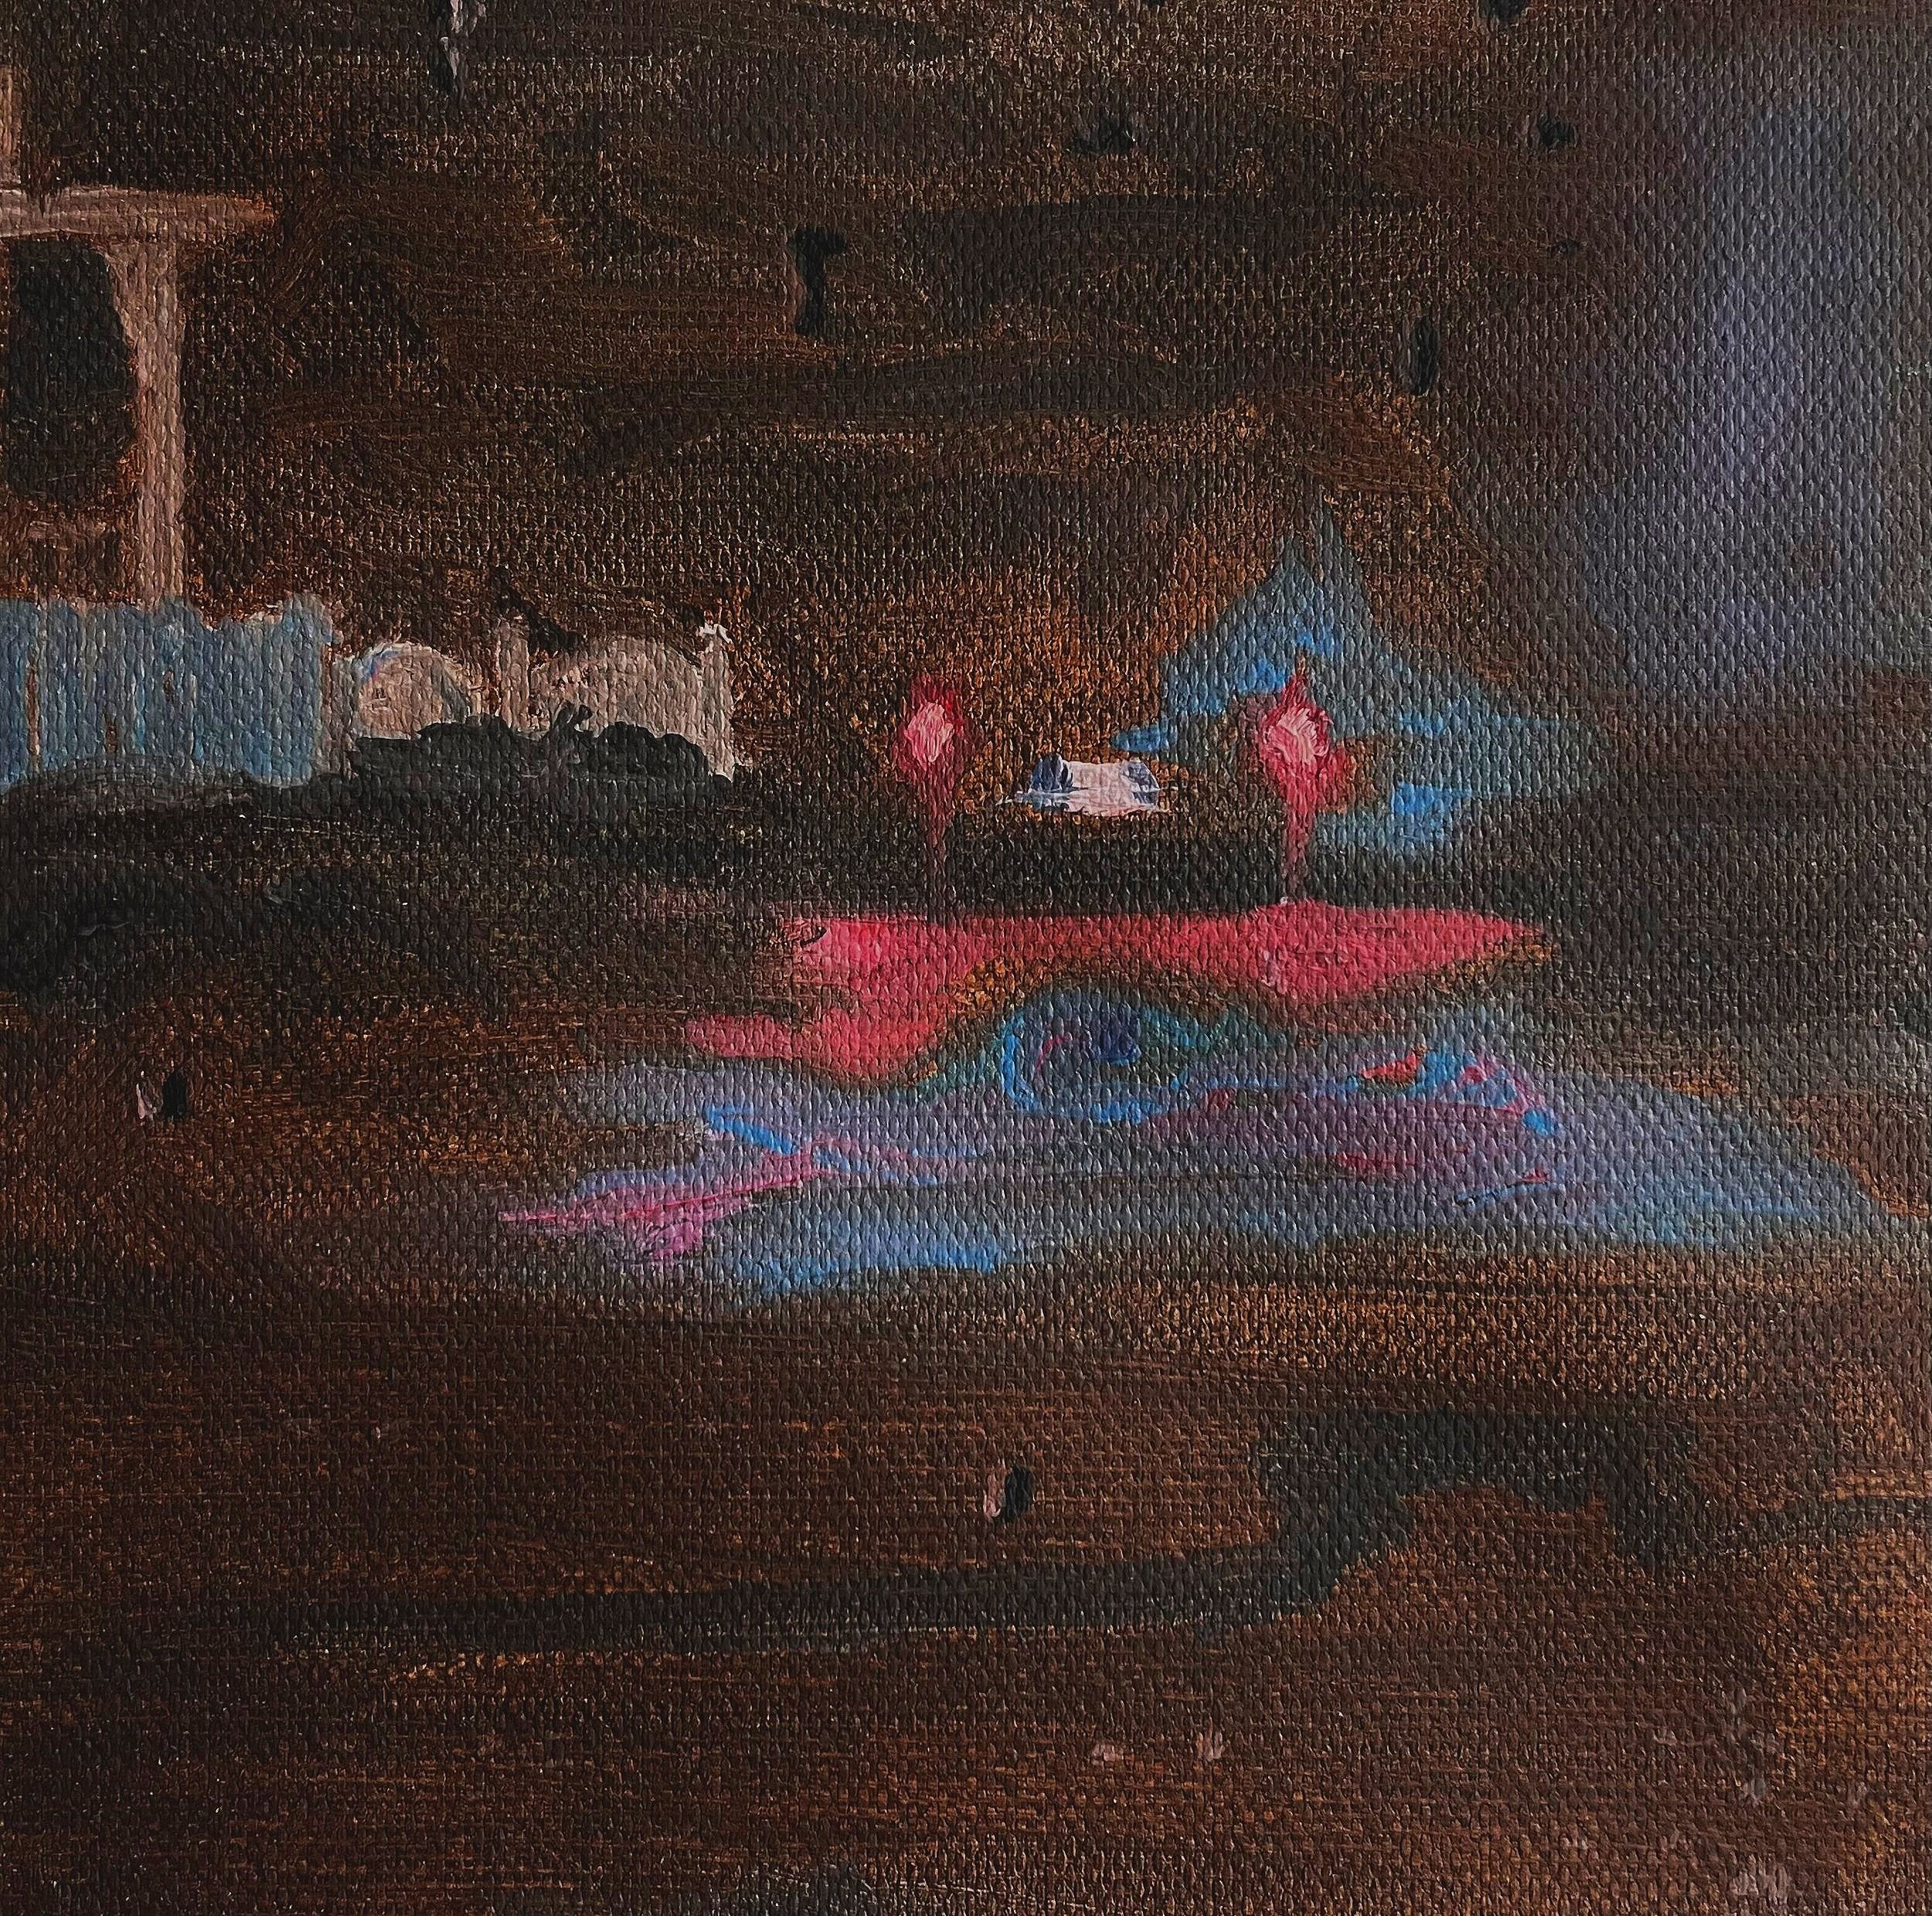   Idle Car in the Rain,  Oil on Canvas , 6” x 6”, 2022 